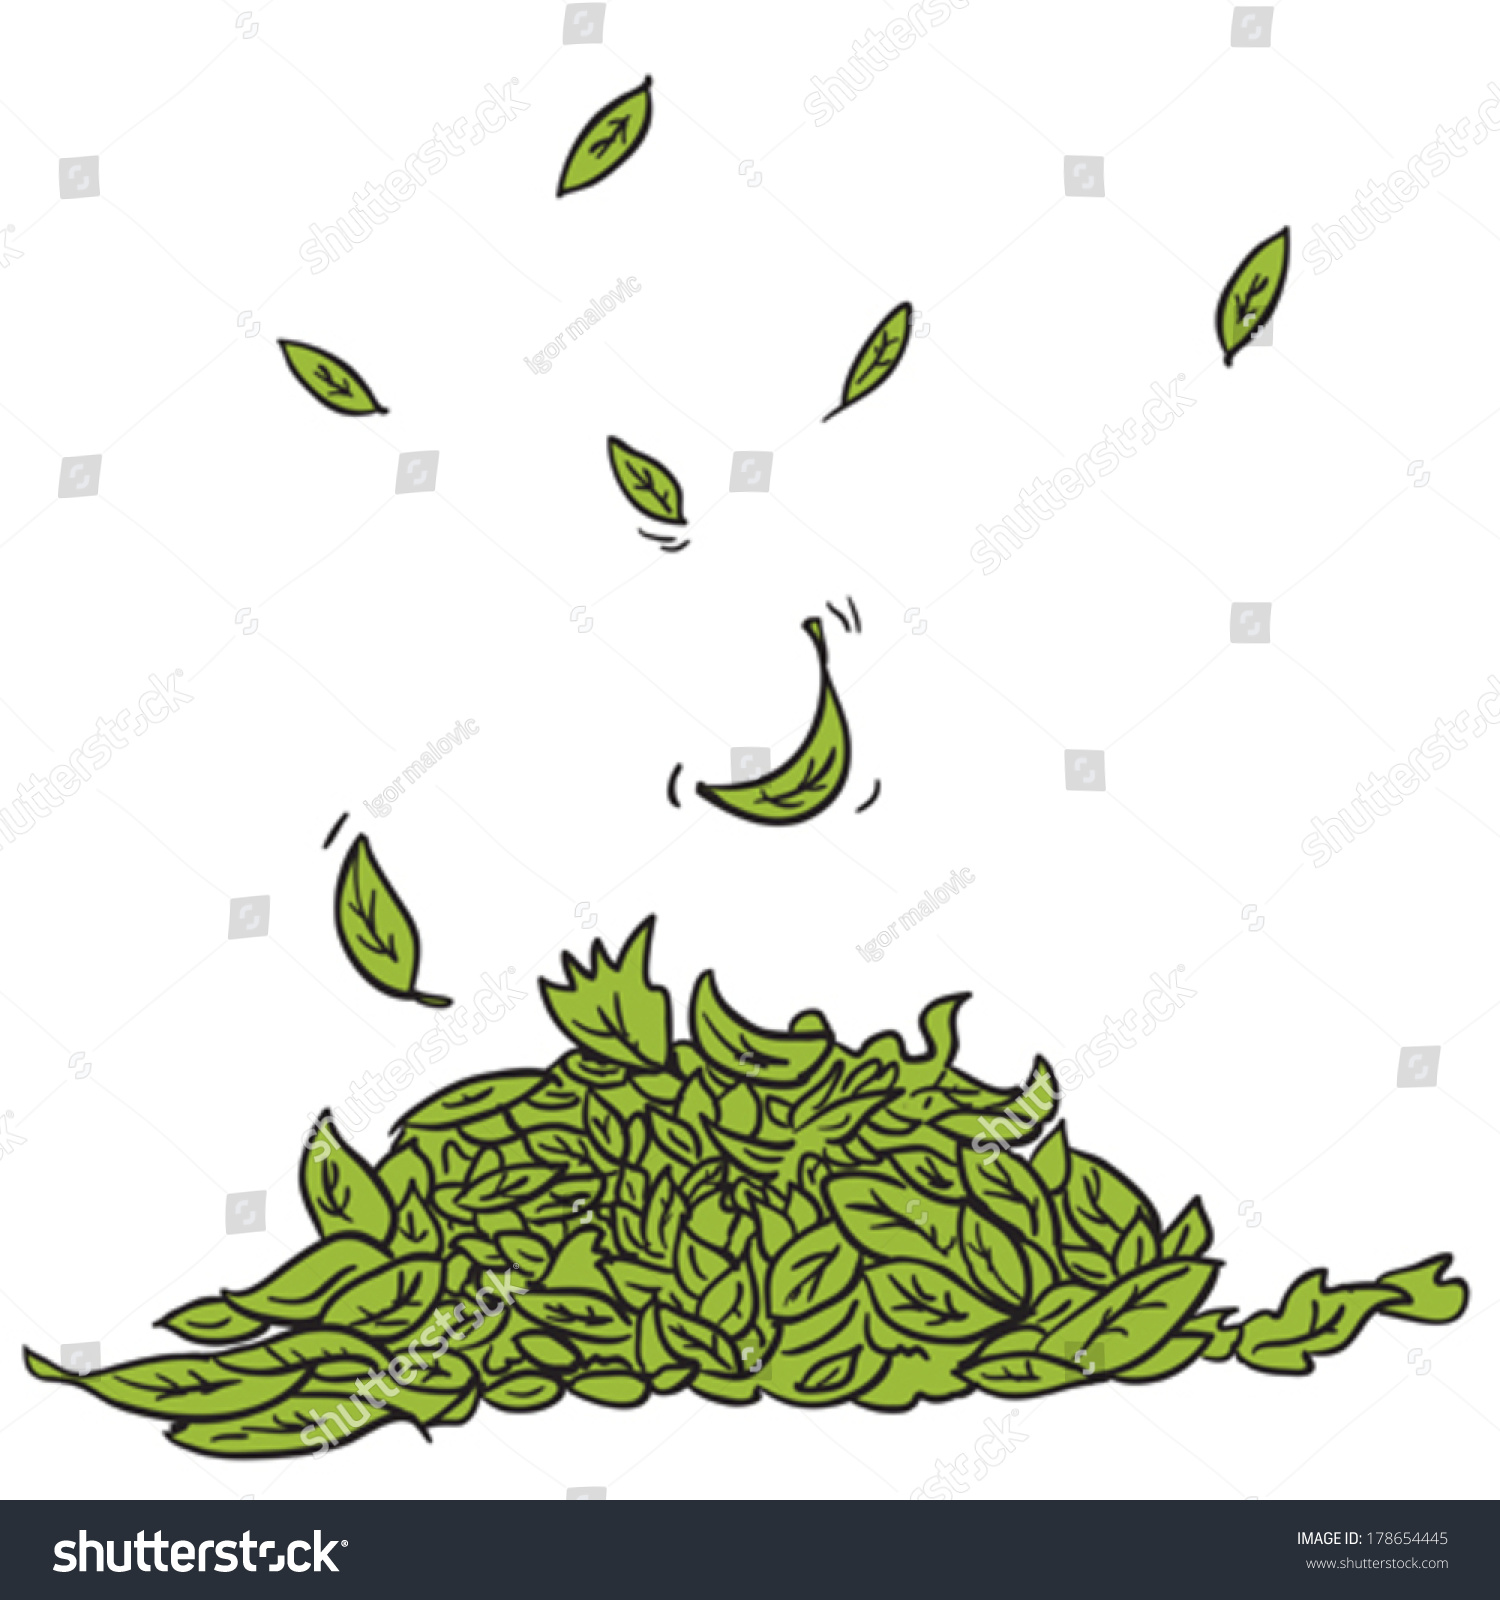 leaf pile clipart - photo #23